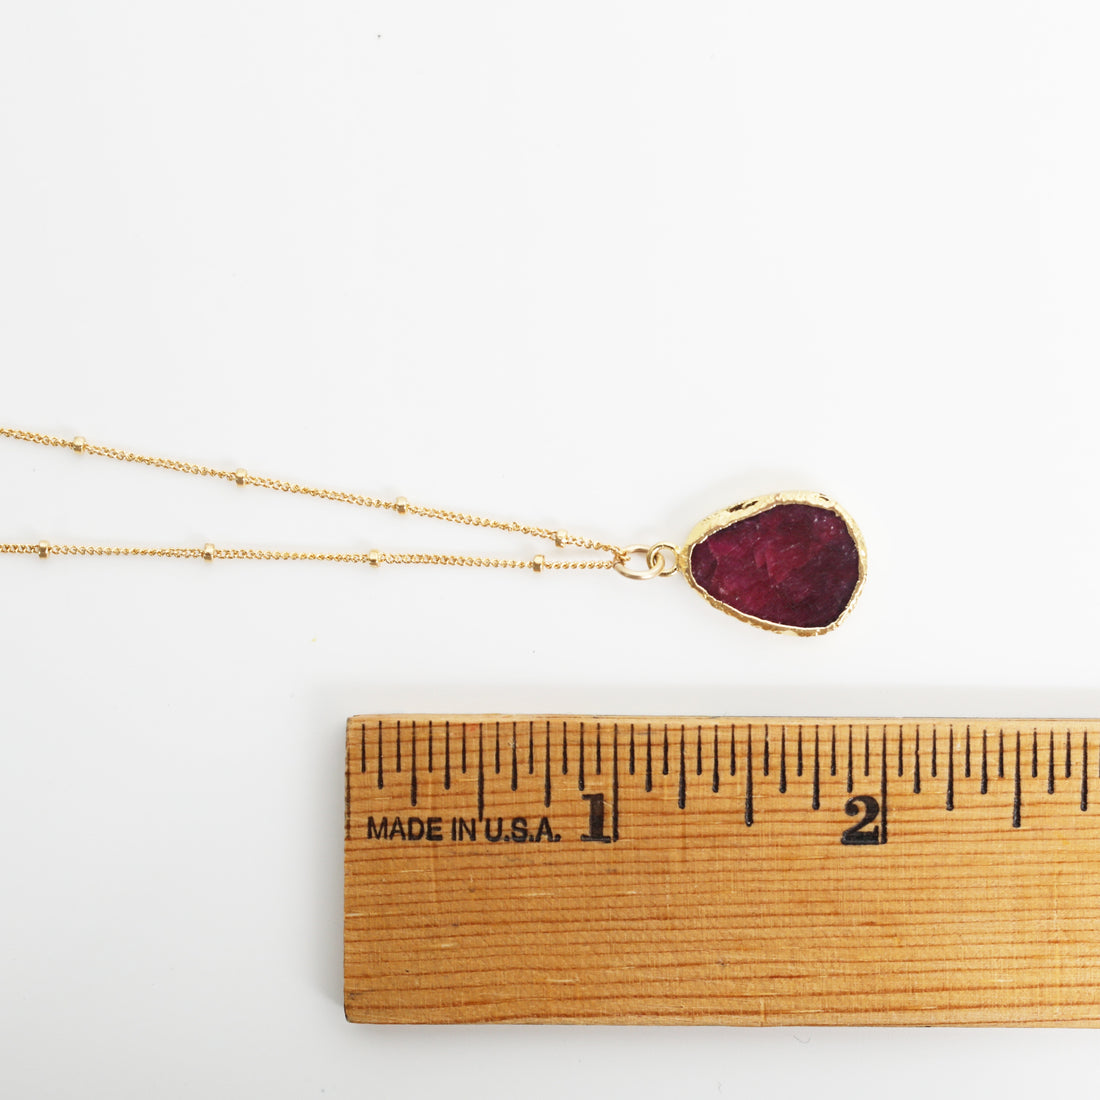 "The Ruby" Organic Teardrop Pendant Necklace